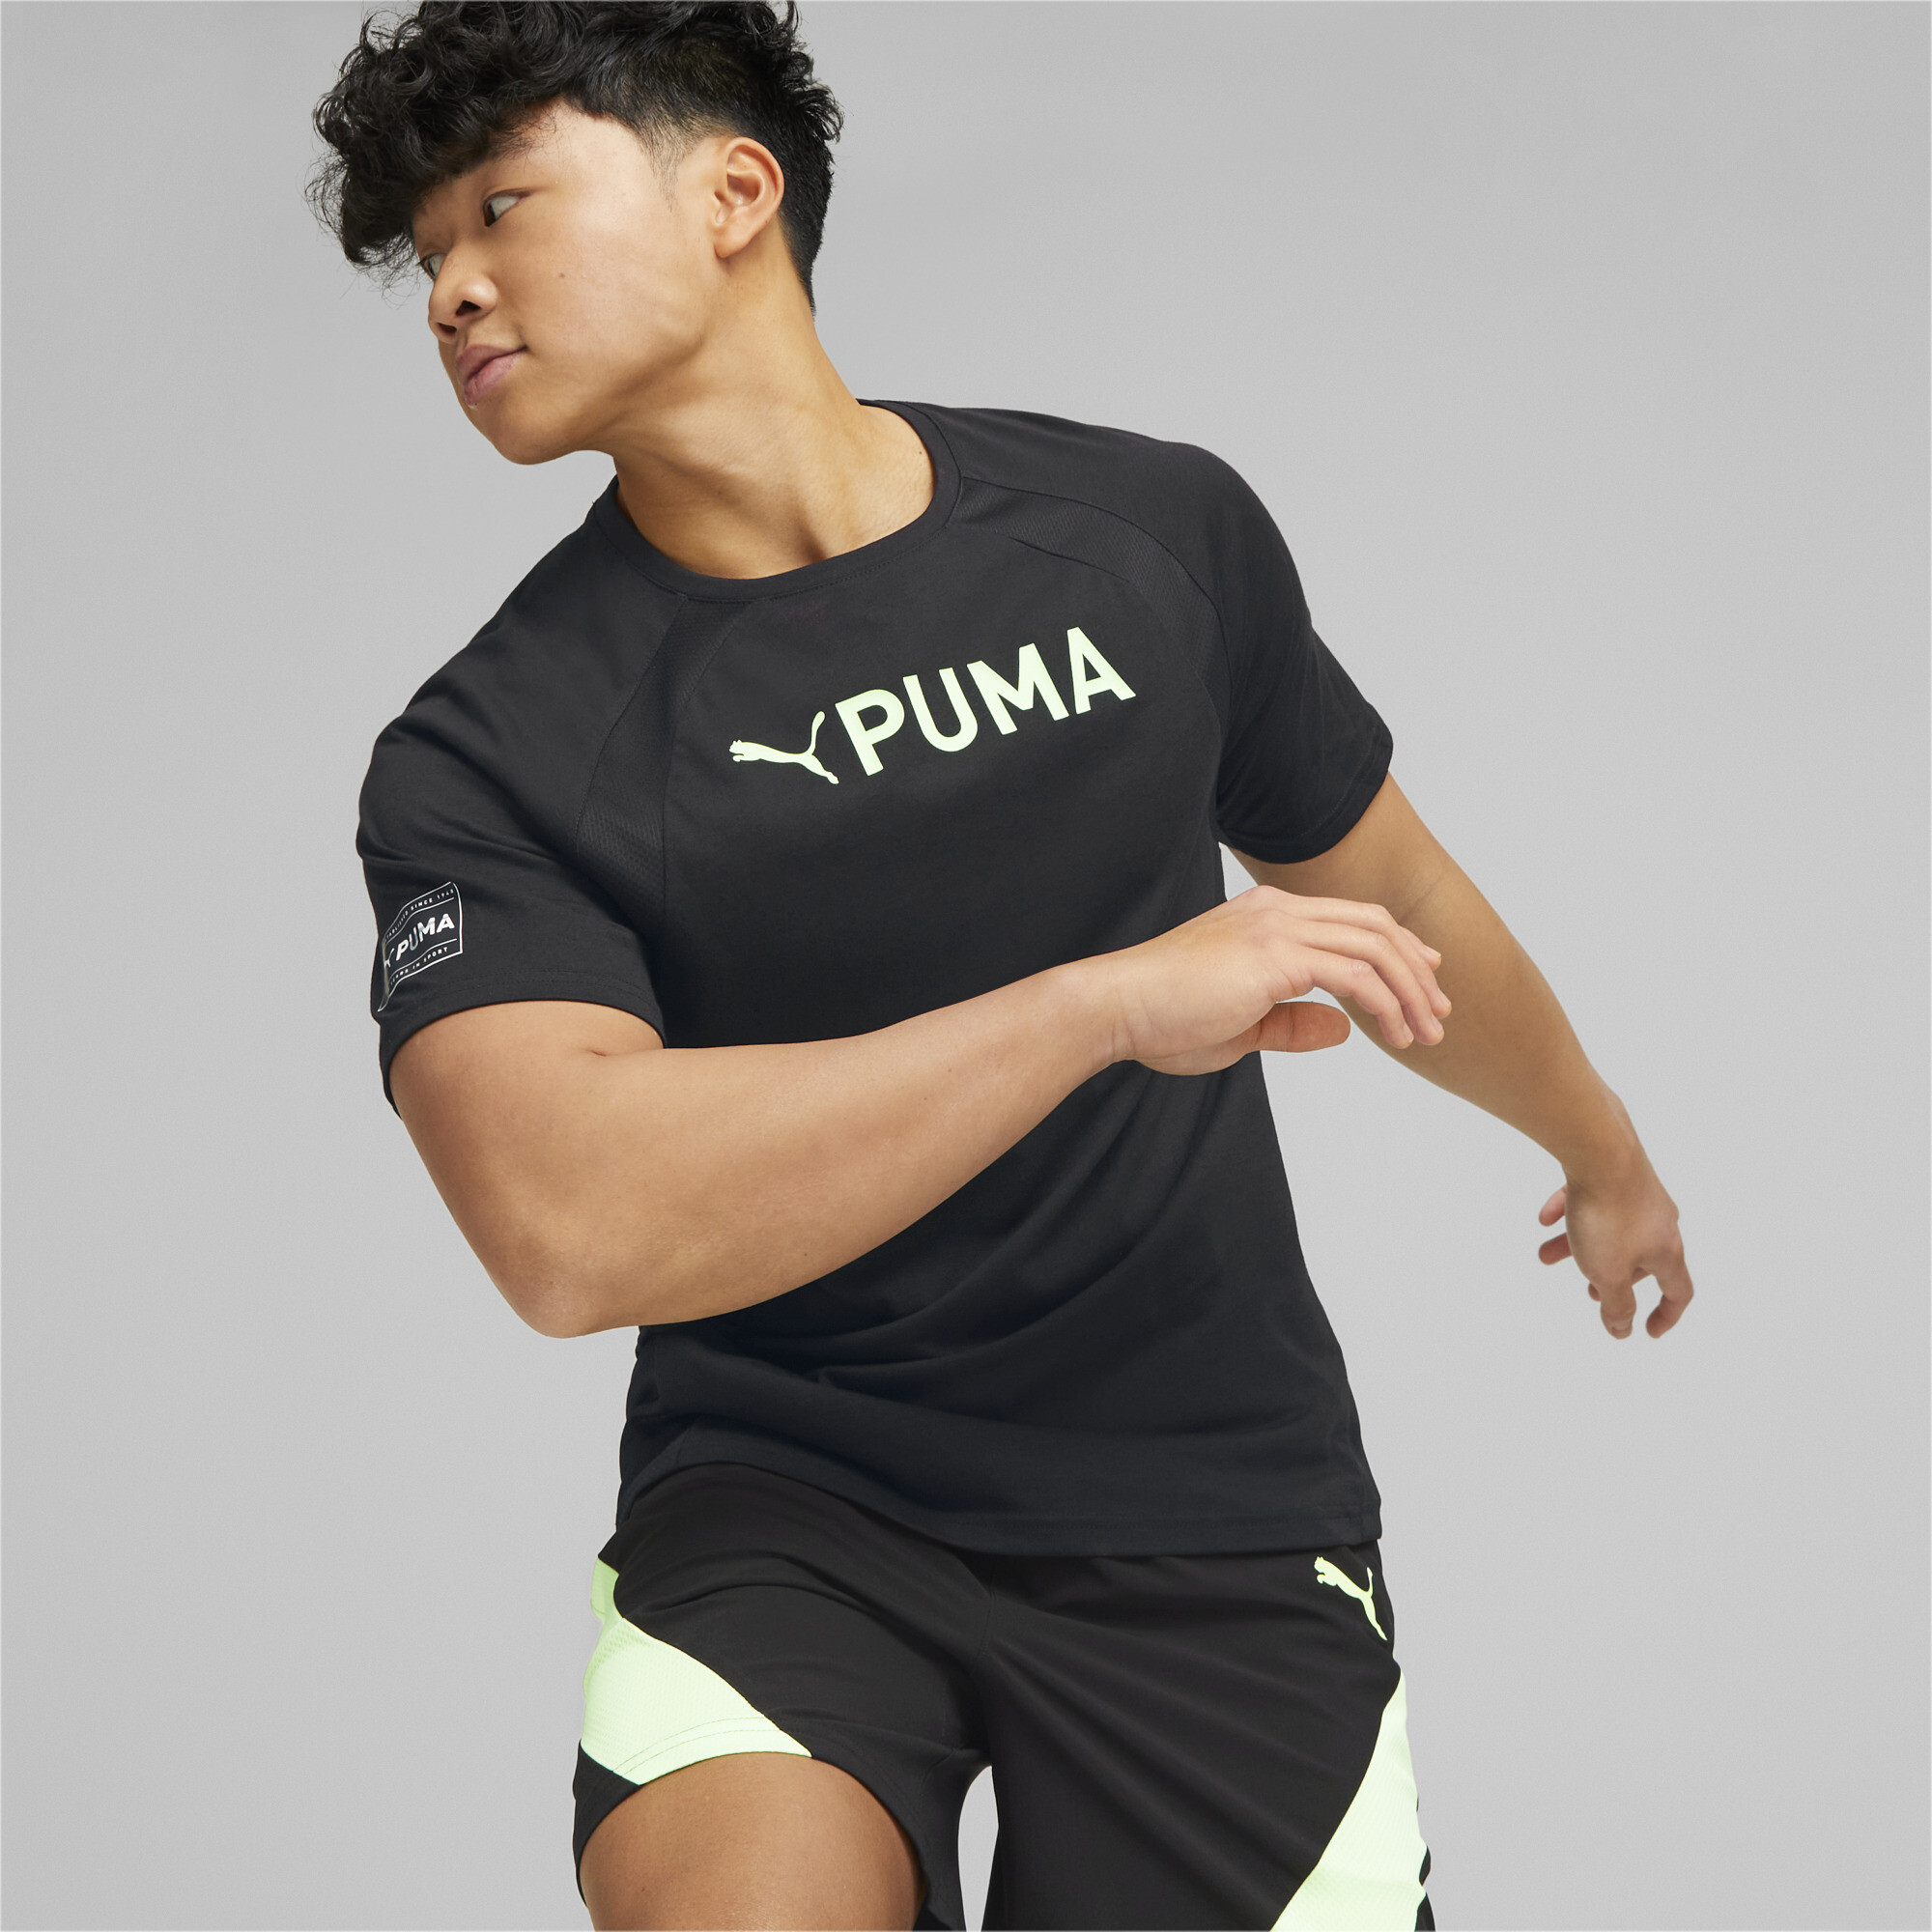 Men's PUMA Fit Ultrabreathe Triblend Training T-Shirt Men In Black, Size XS